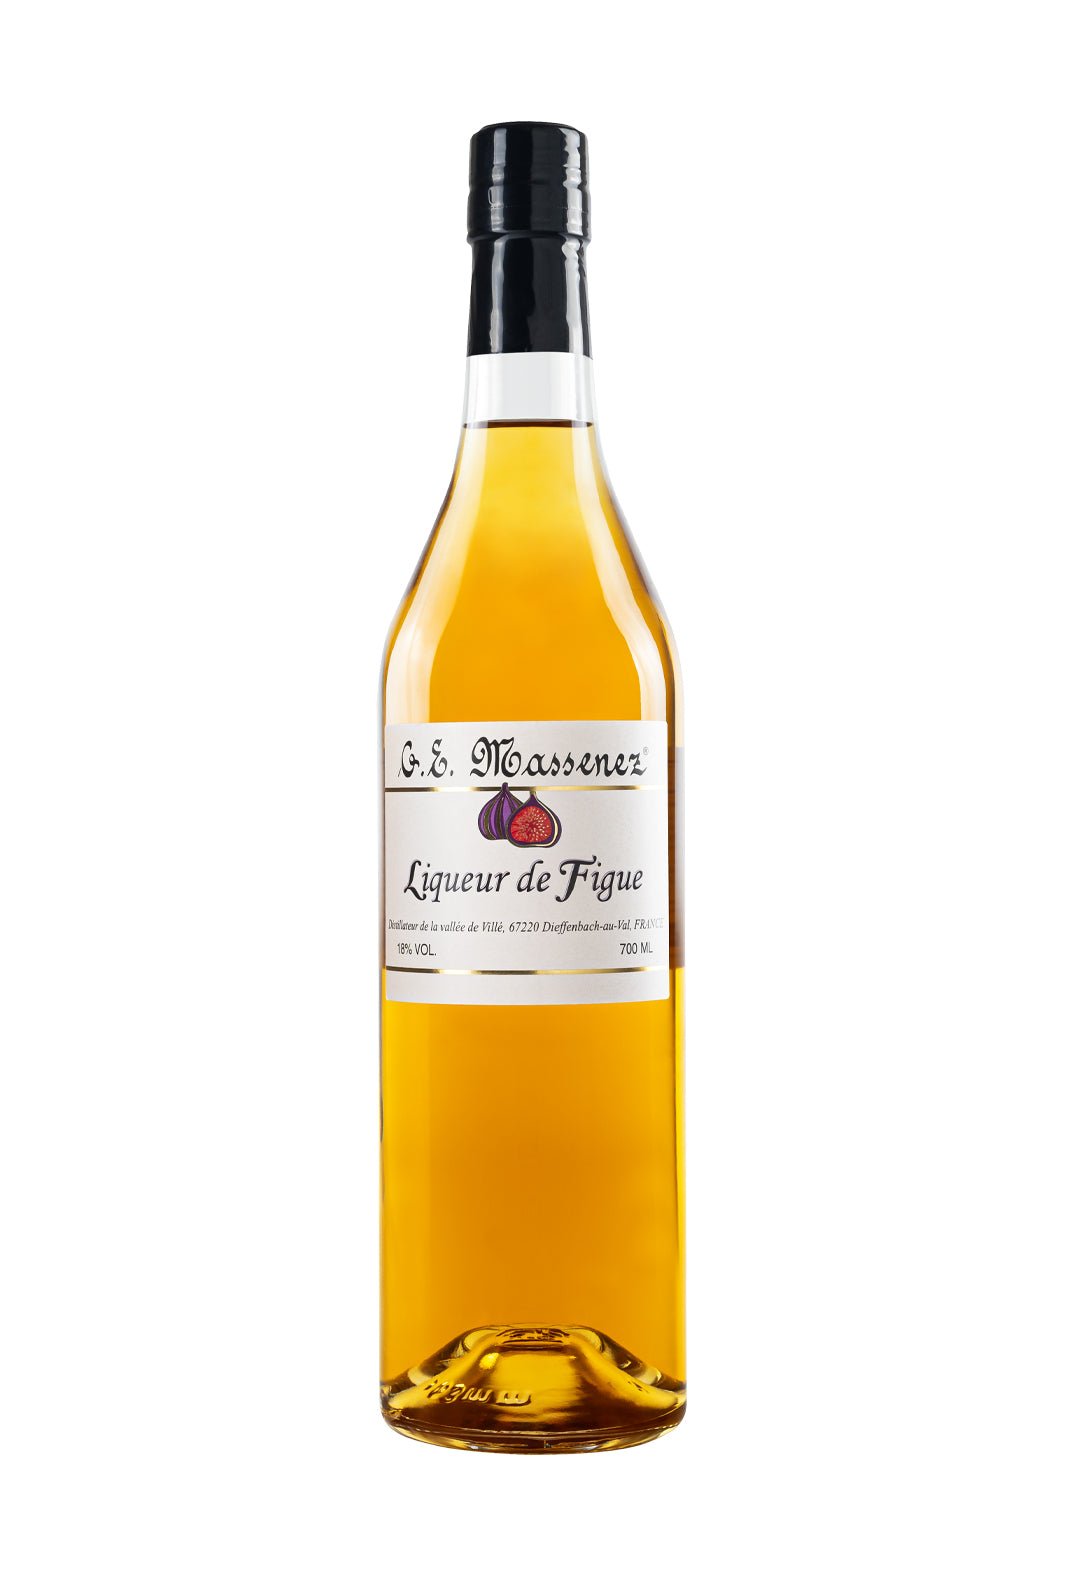 Massenez Fig Liqueur 18% 700ml | Liqueurs | Shop online at Spirits of France